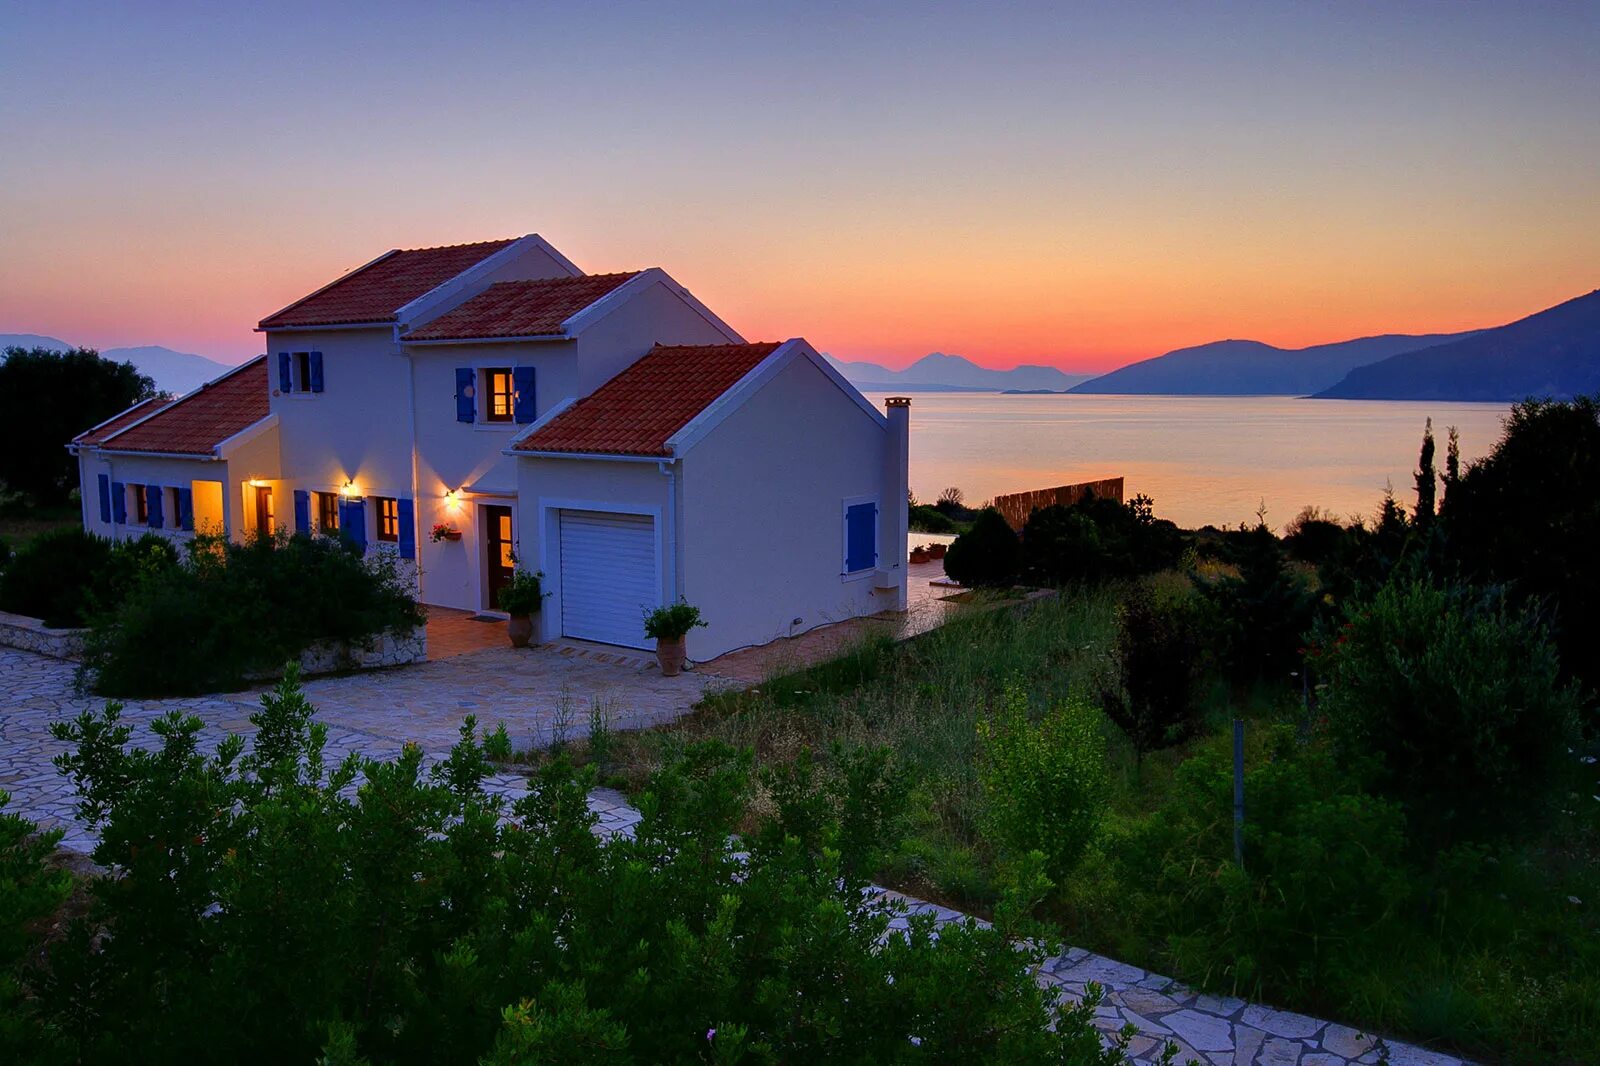 Невдалеке от дома. Дом у моря Греция вилла. Дом миллиардера Кефалония. Греция море пинии вилла. Земляничная вилл Греция.